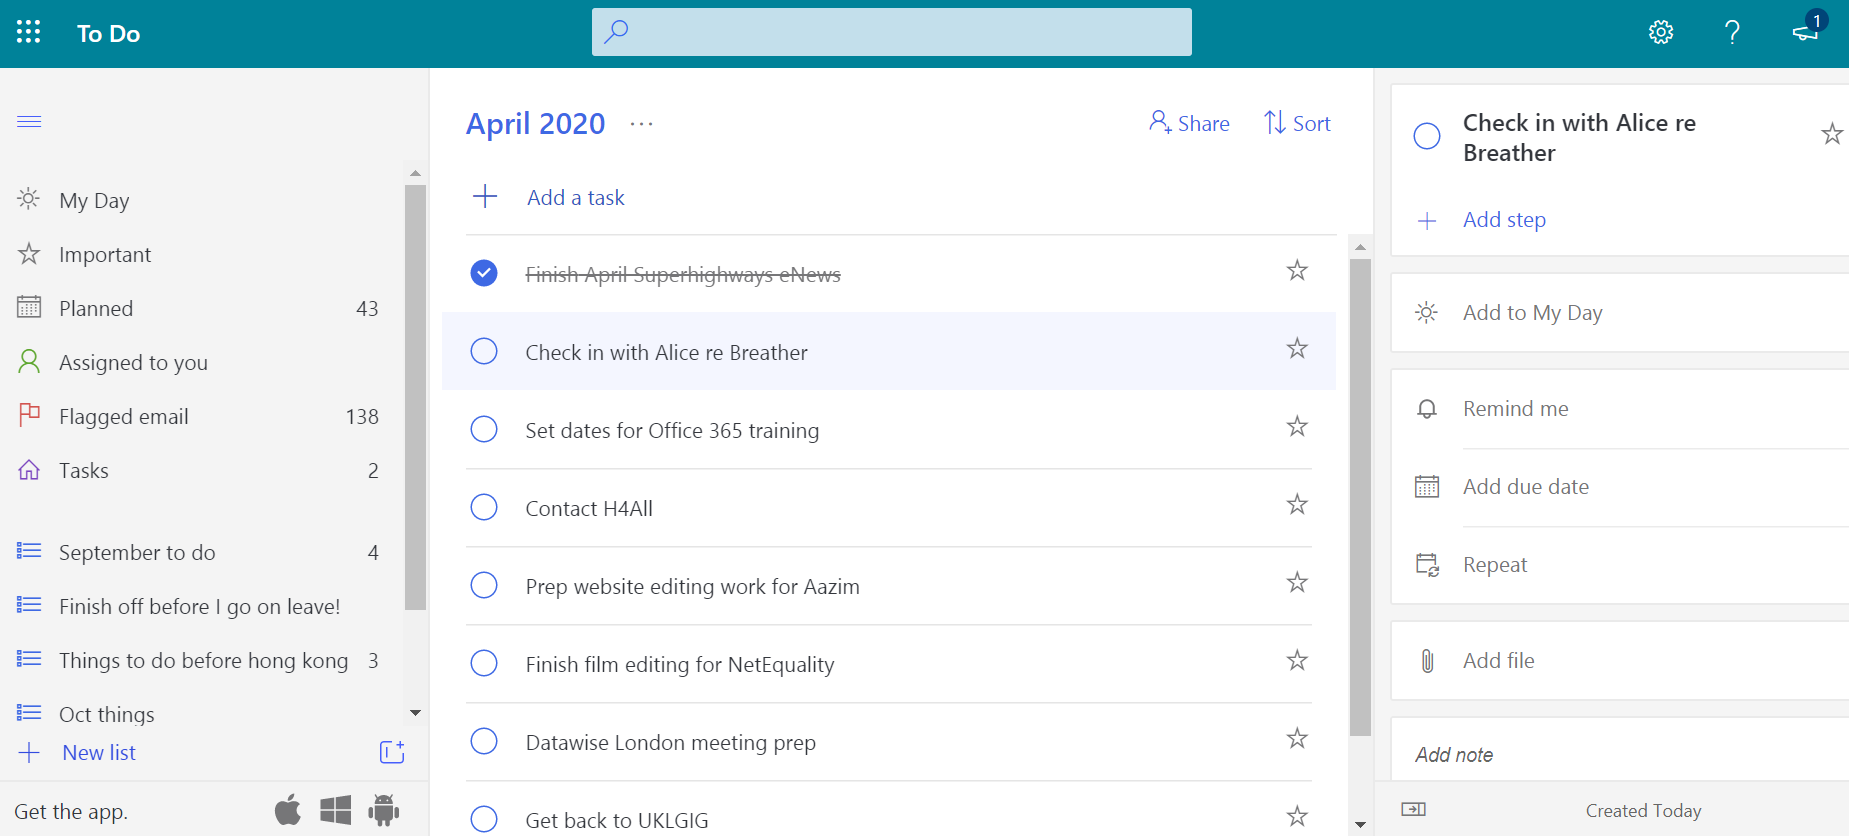 Screenshot of the To Do app listing tasks